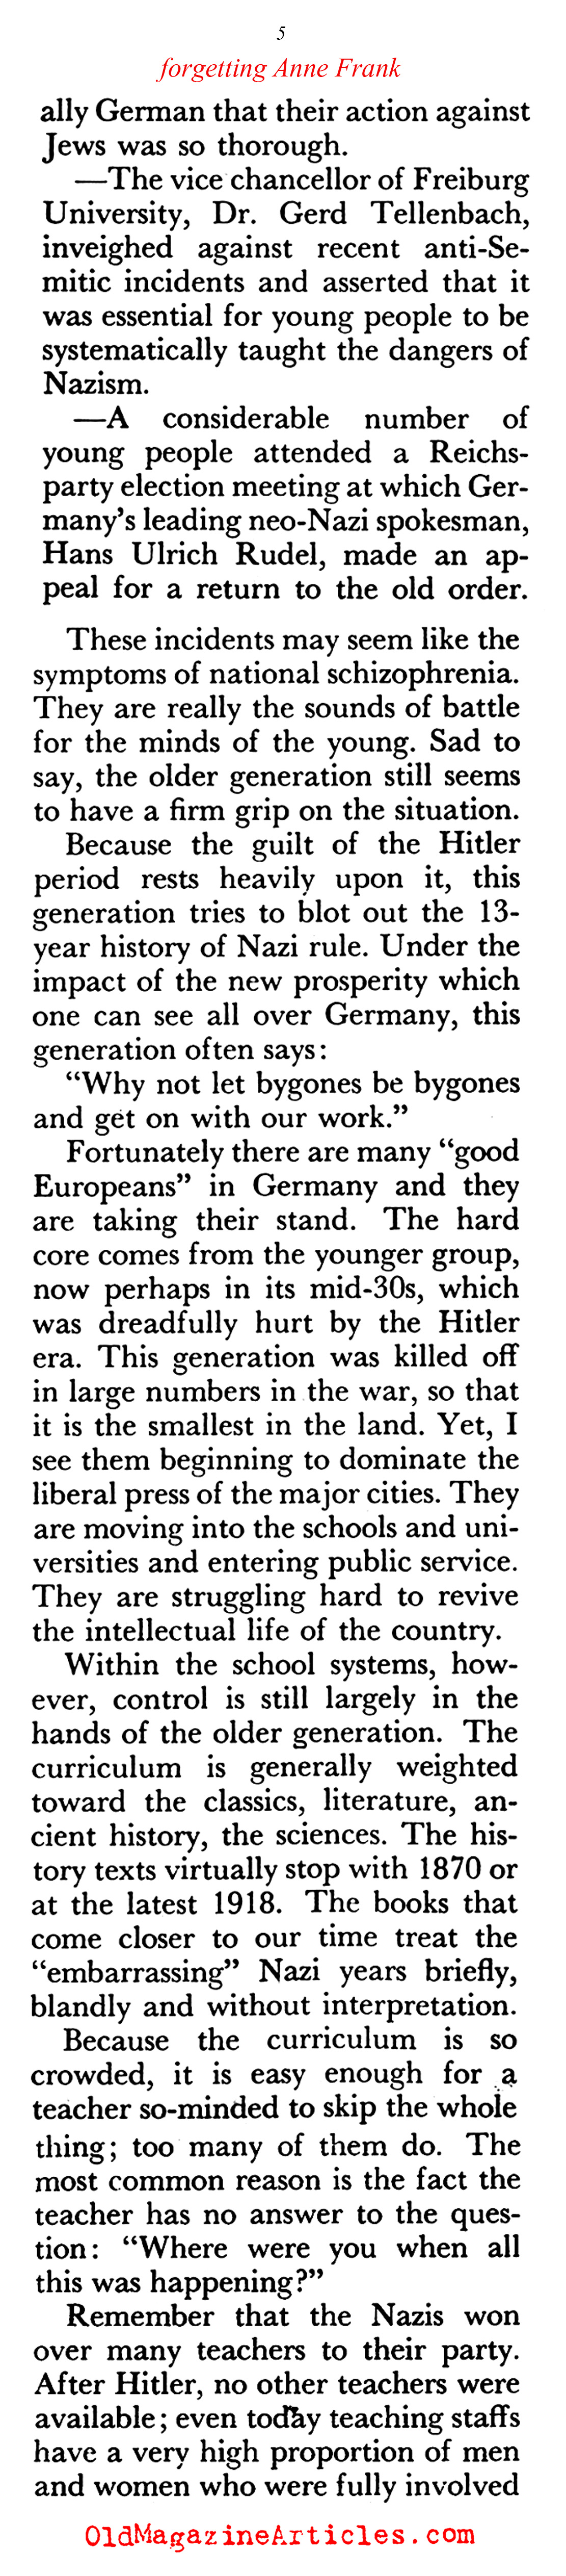 Has Germany Forgotten Anne Frank? (Coronet Magazine, 1960)